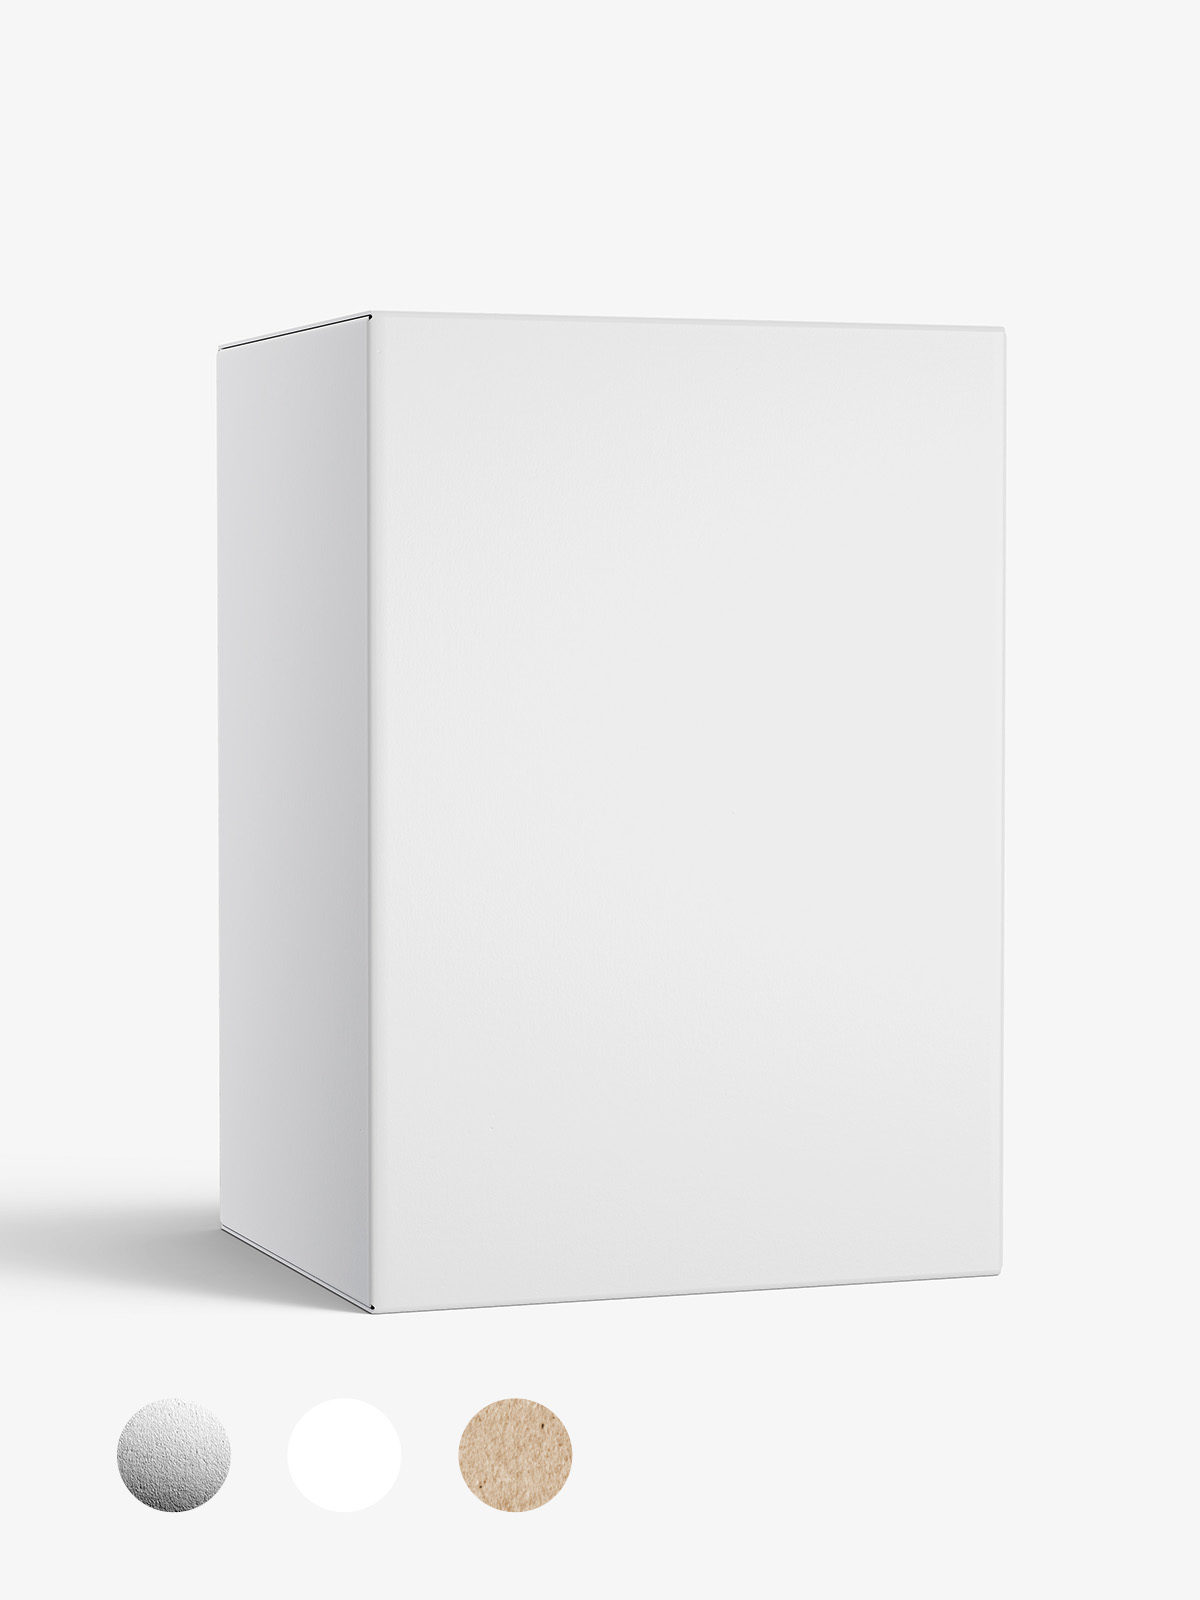 Download Box mockup / 70x100x60 mm / white - metallic - kraft - Smarty Mockups